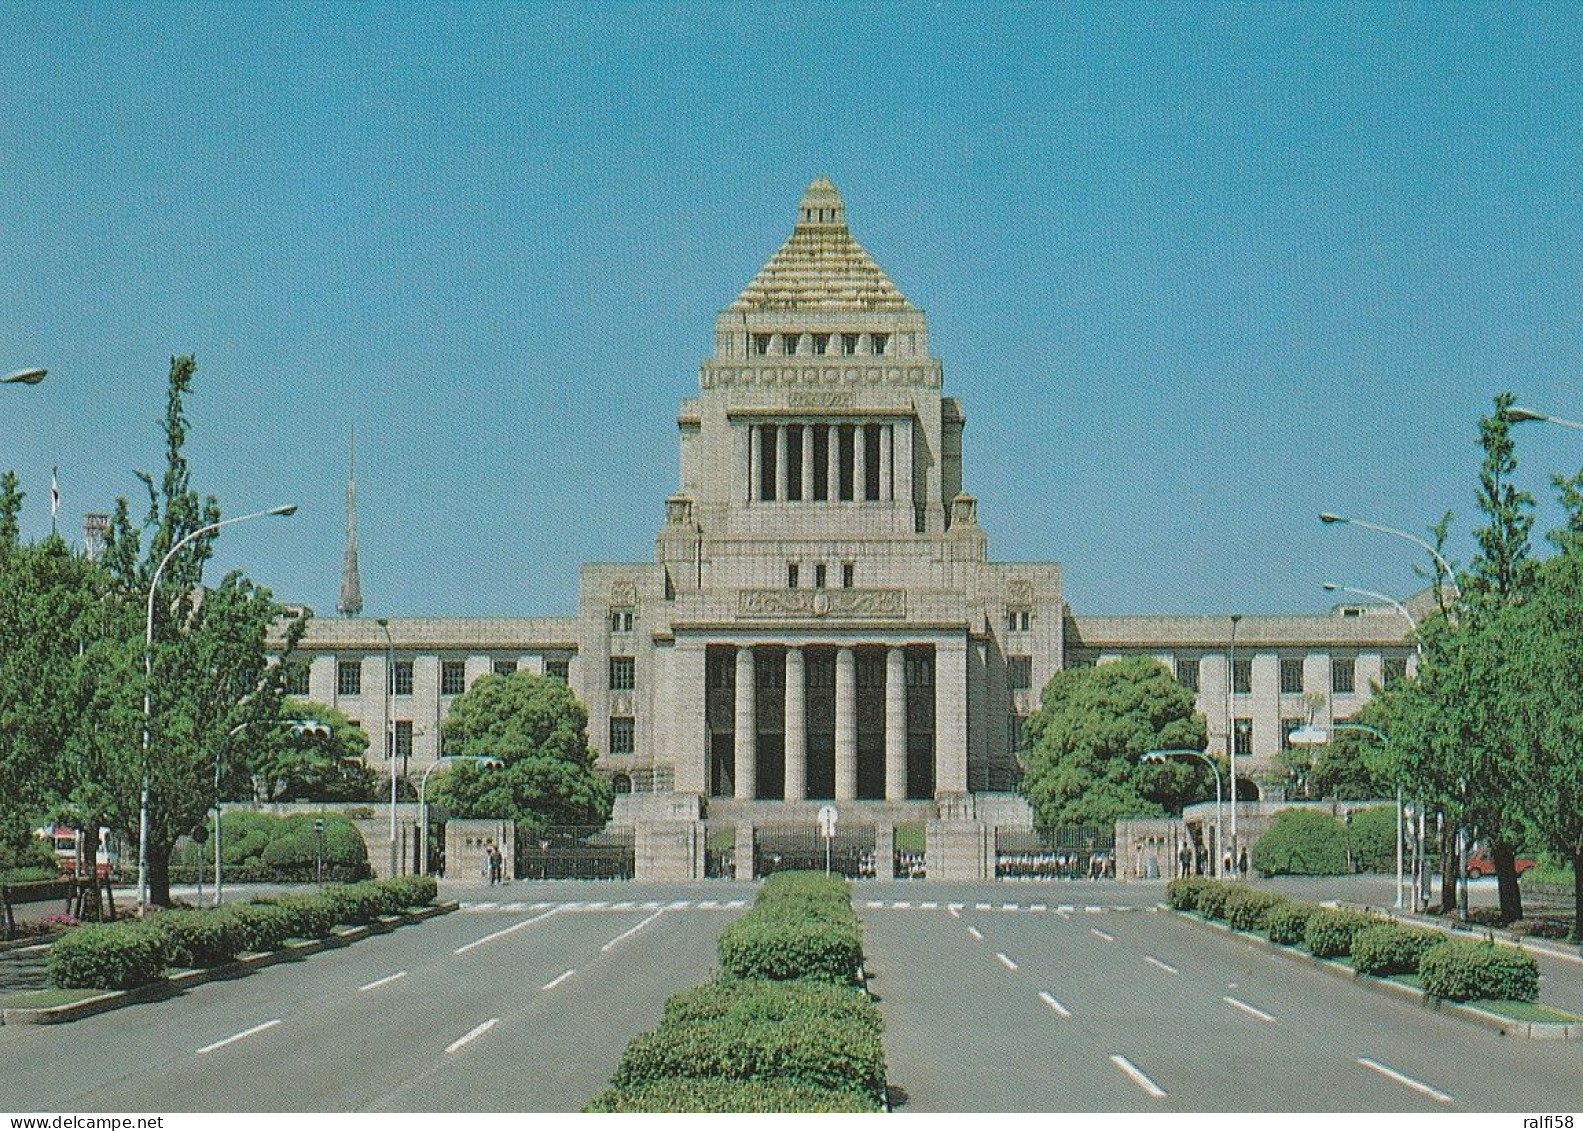 1 AK Japan * Das Nationale Parlamentsgebäude In Tokyo (engl. National Diet Building) Eröffnet 1936 * - Tokyo